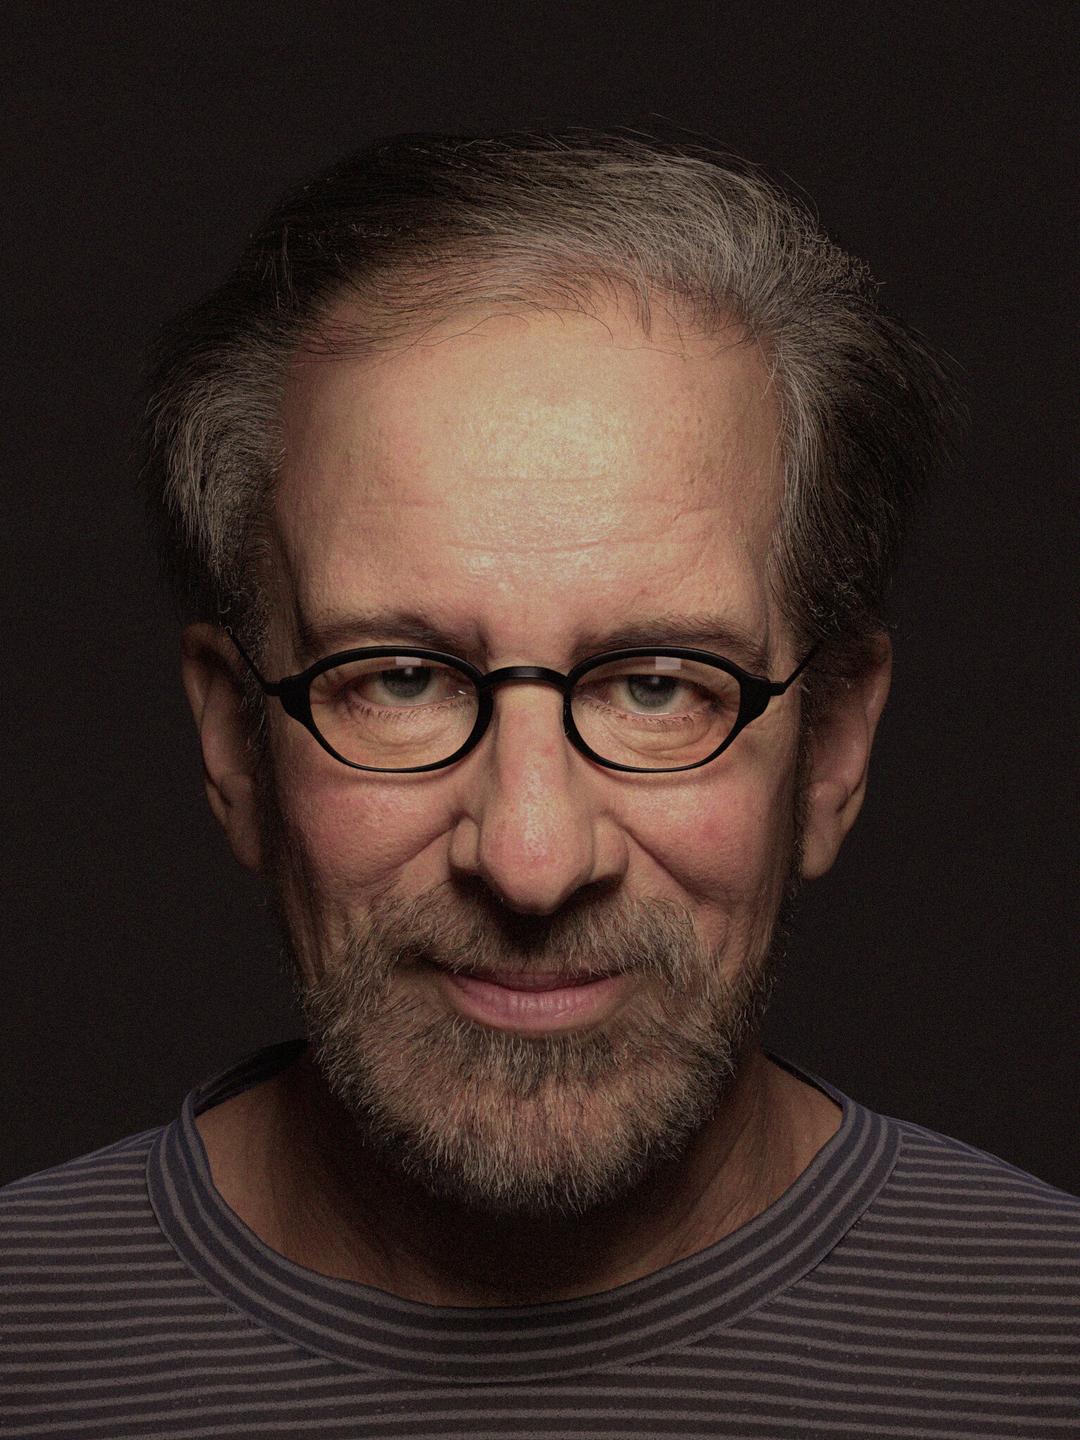 Steven Spielberg life story